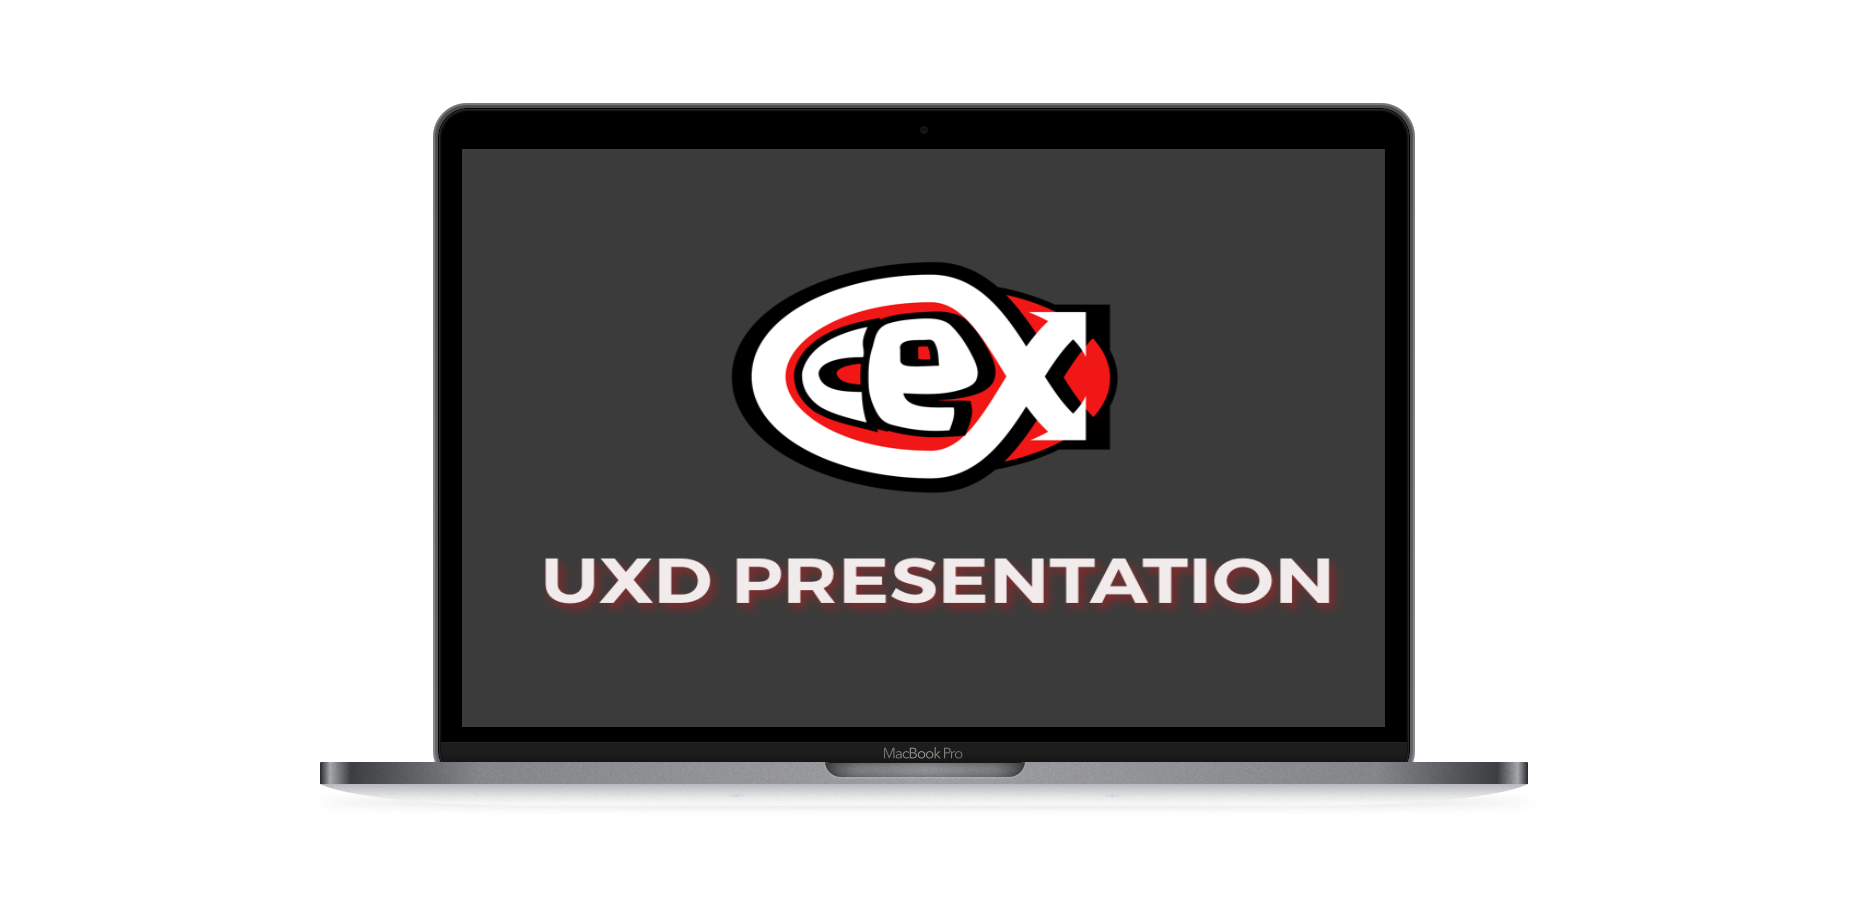 The uxd website displayed on laptop